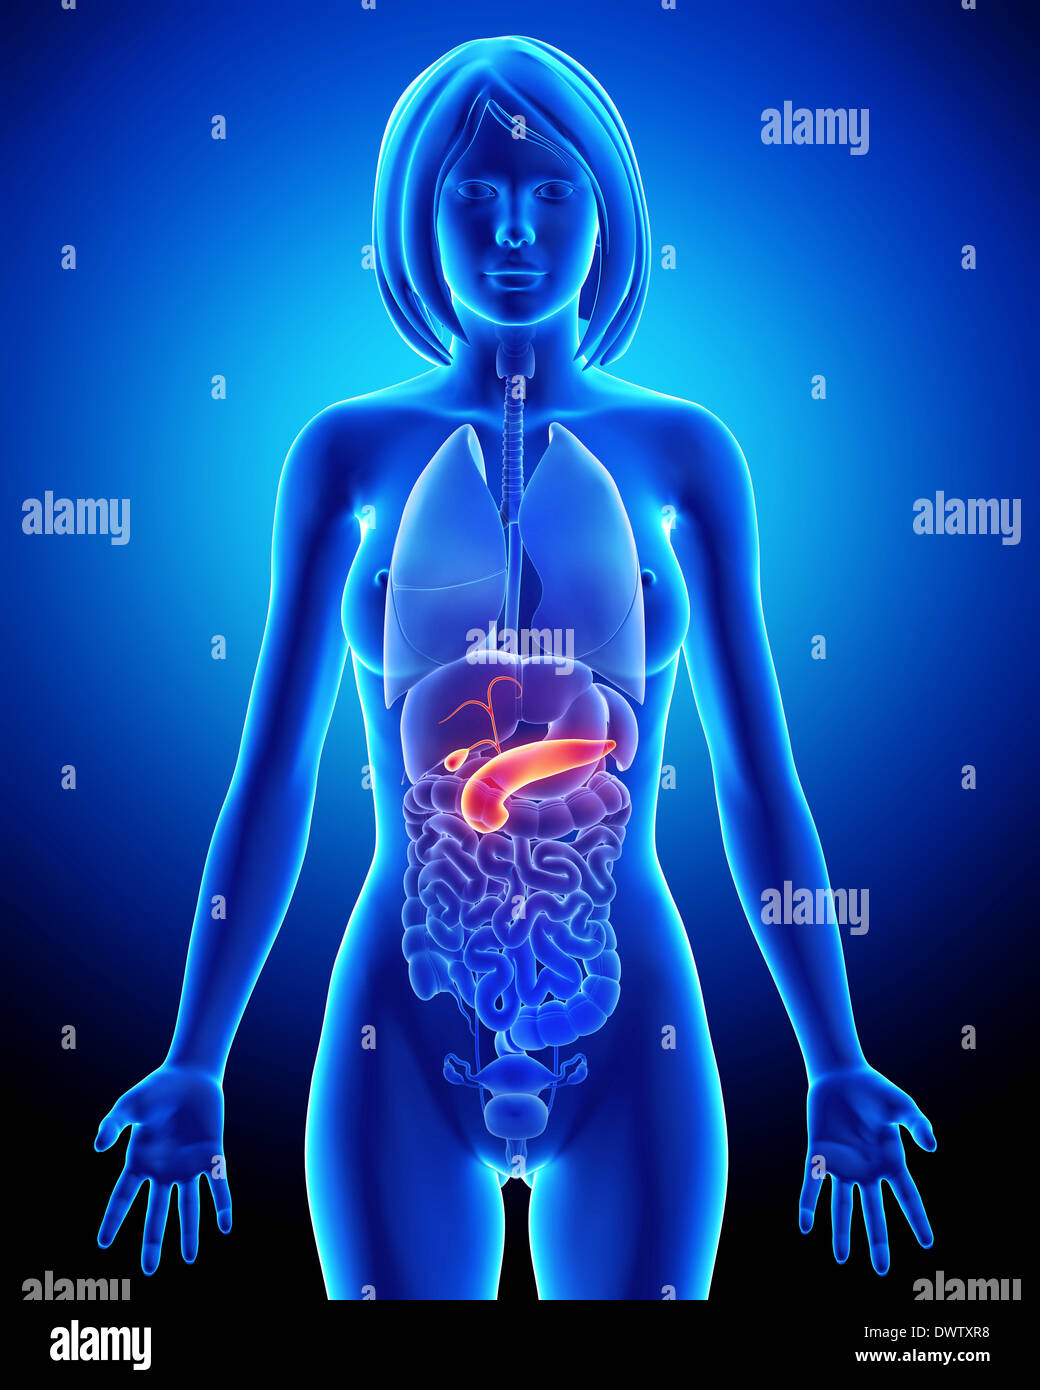 Pancreas drawing Stock Photo - Alamy